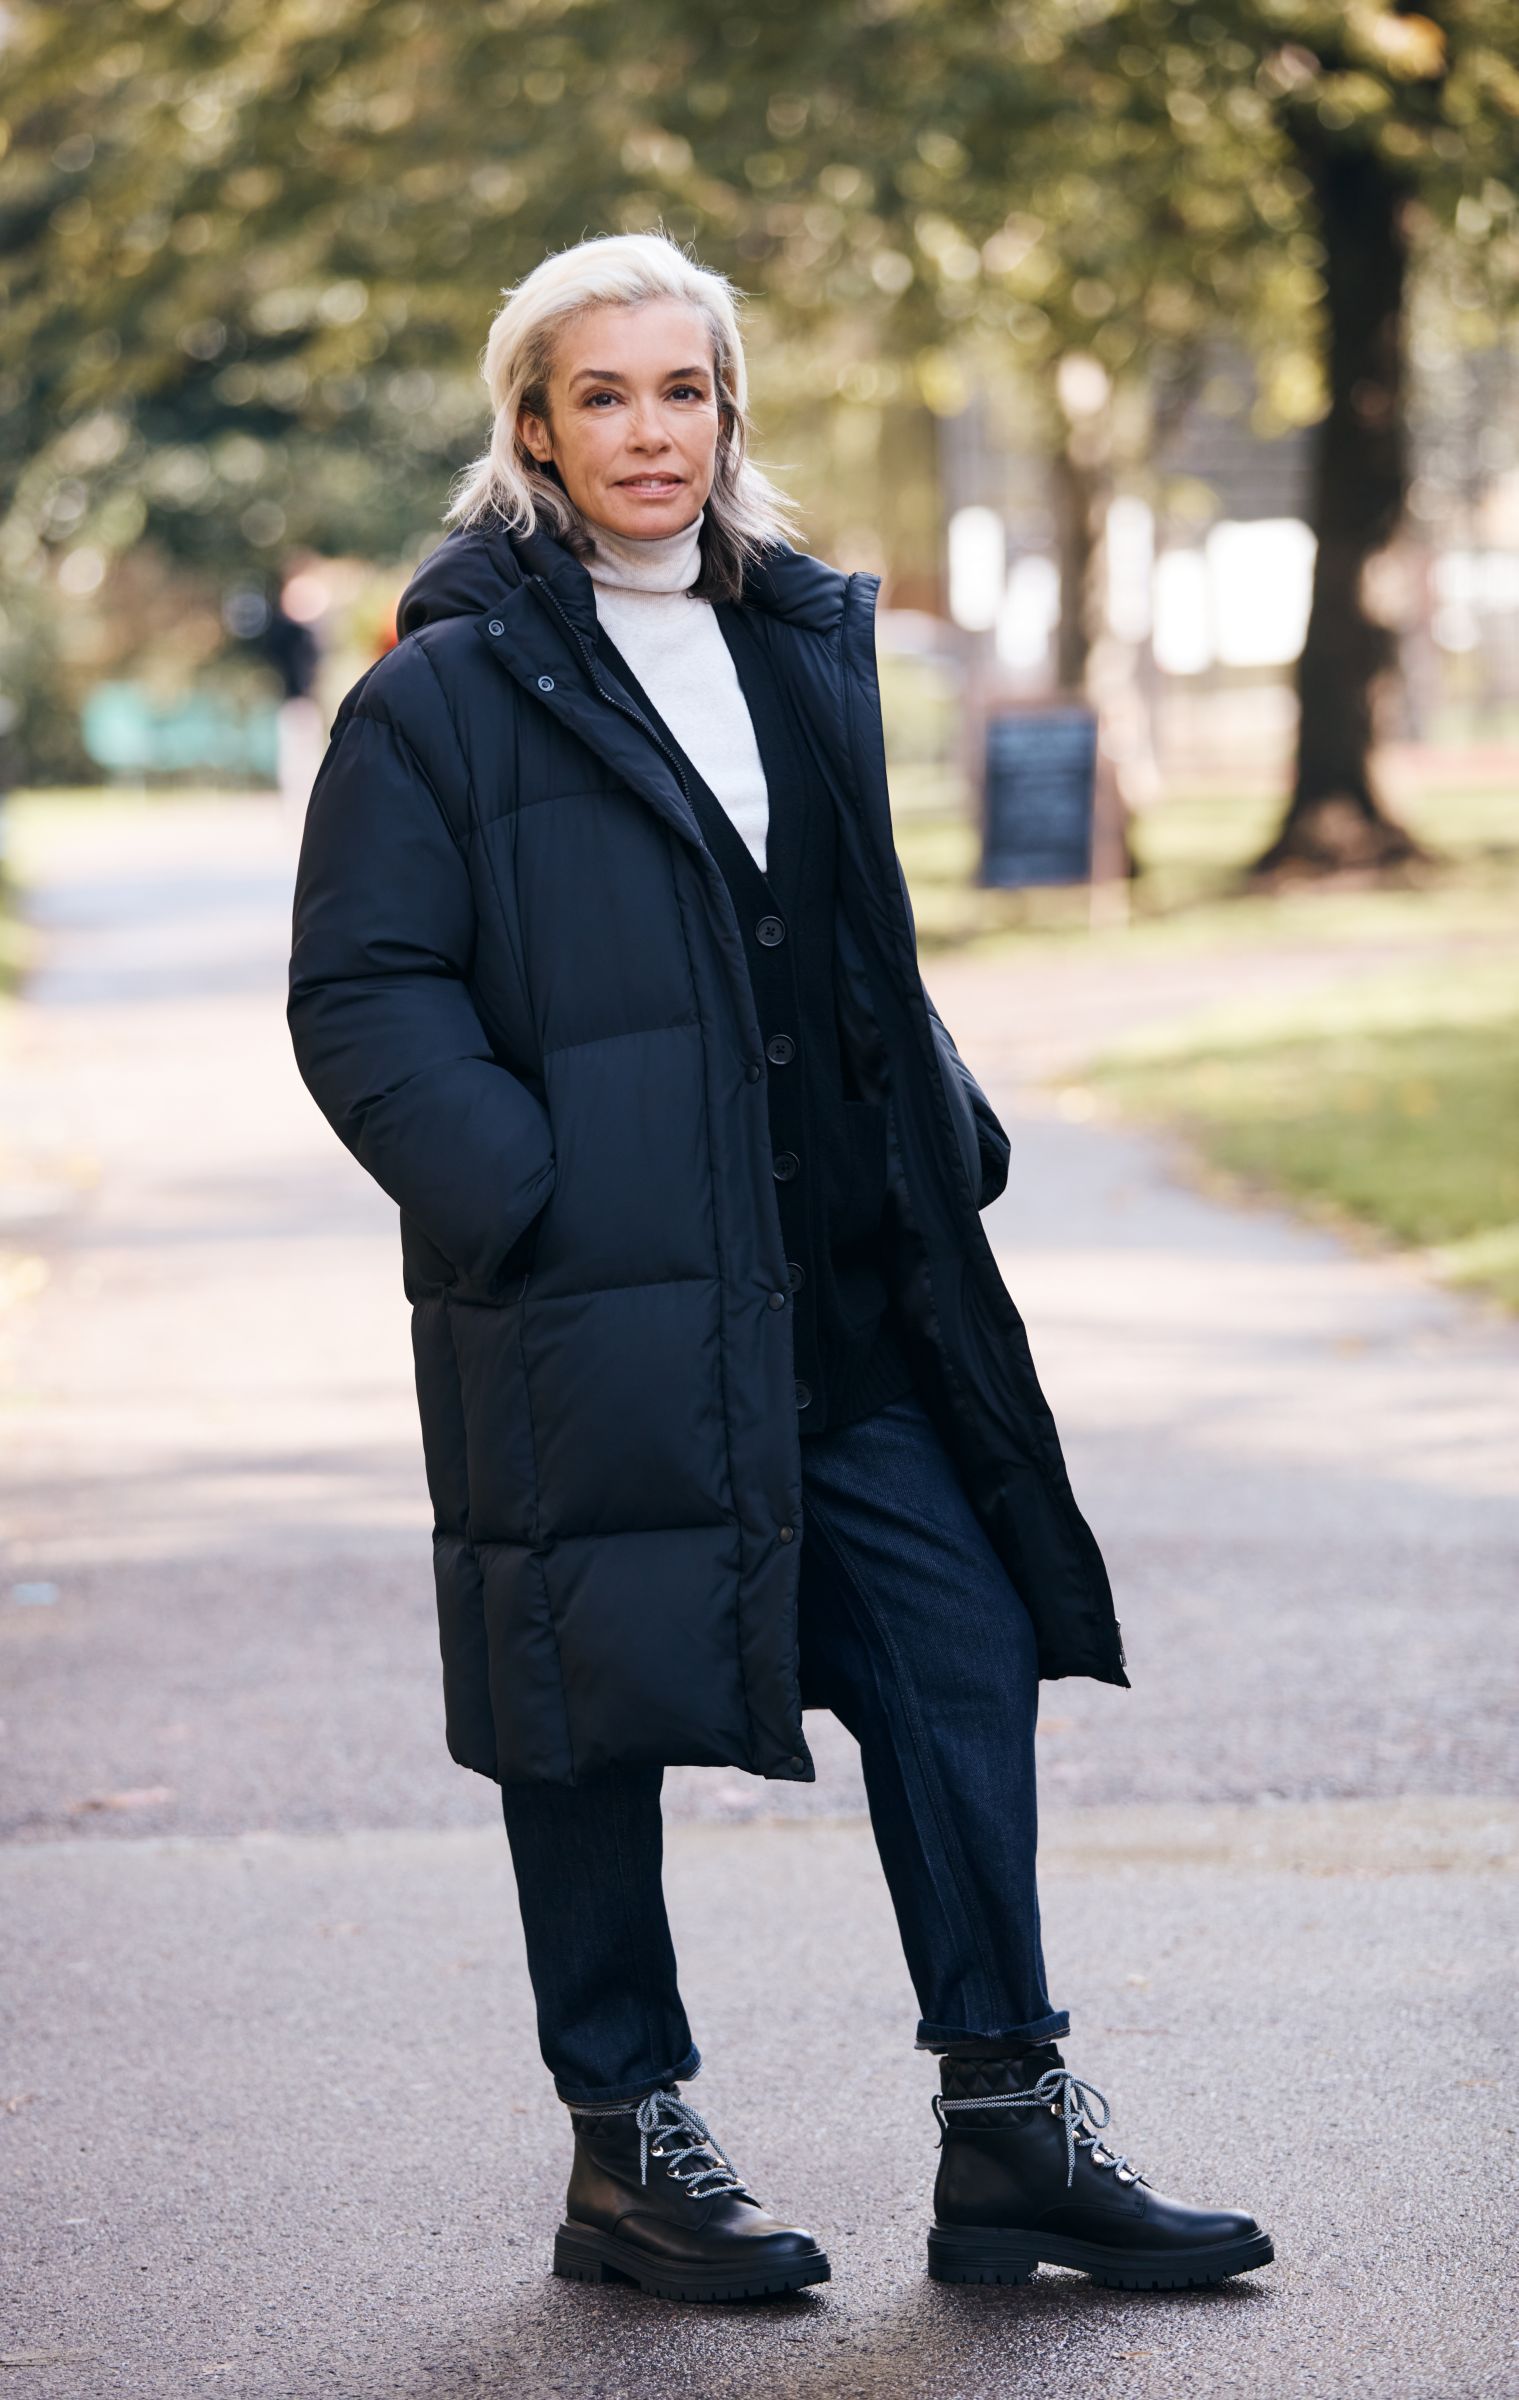 Best women's winter coats | John Lewis u0026 Partners